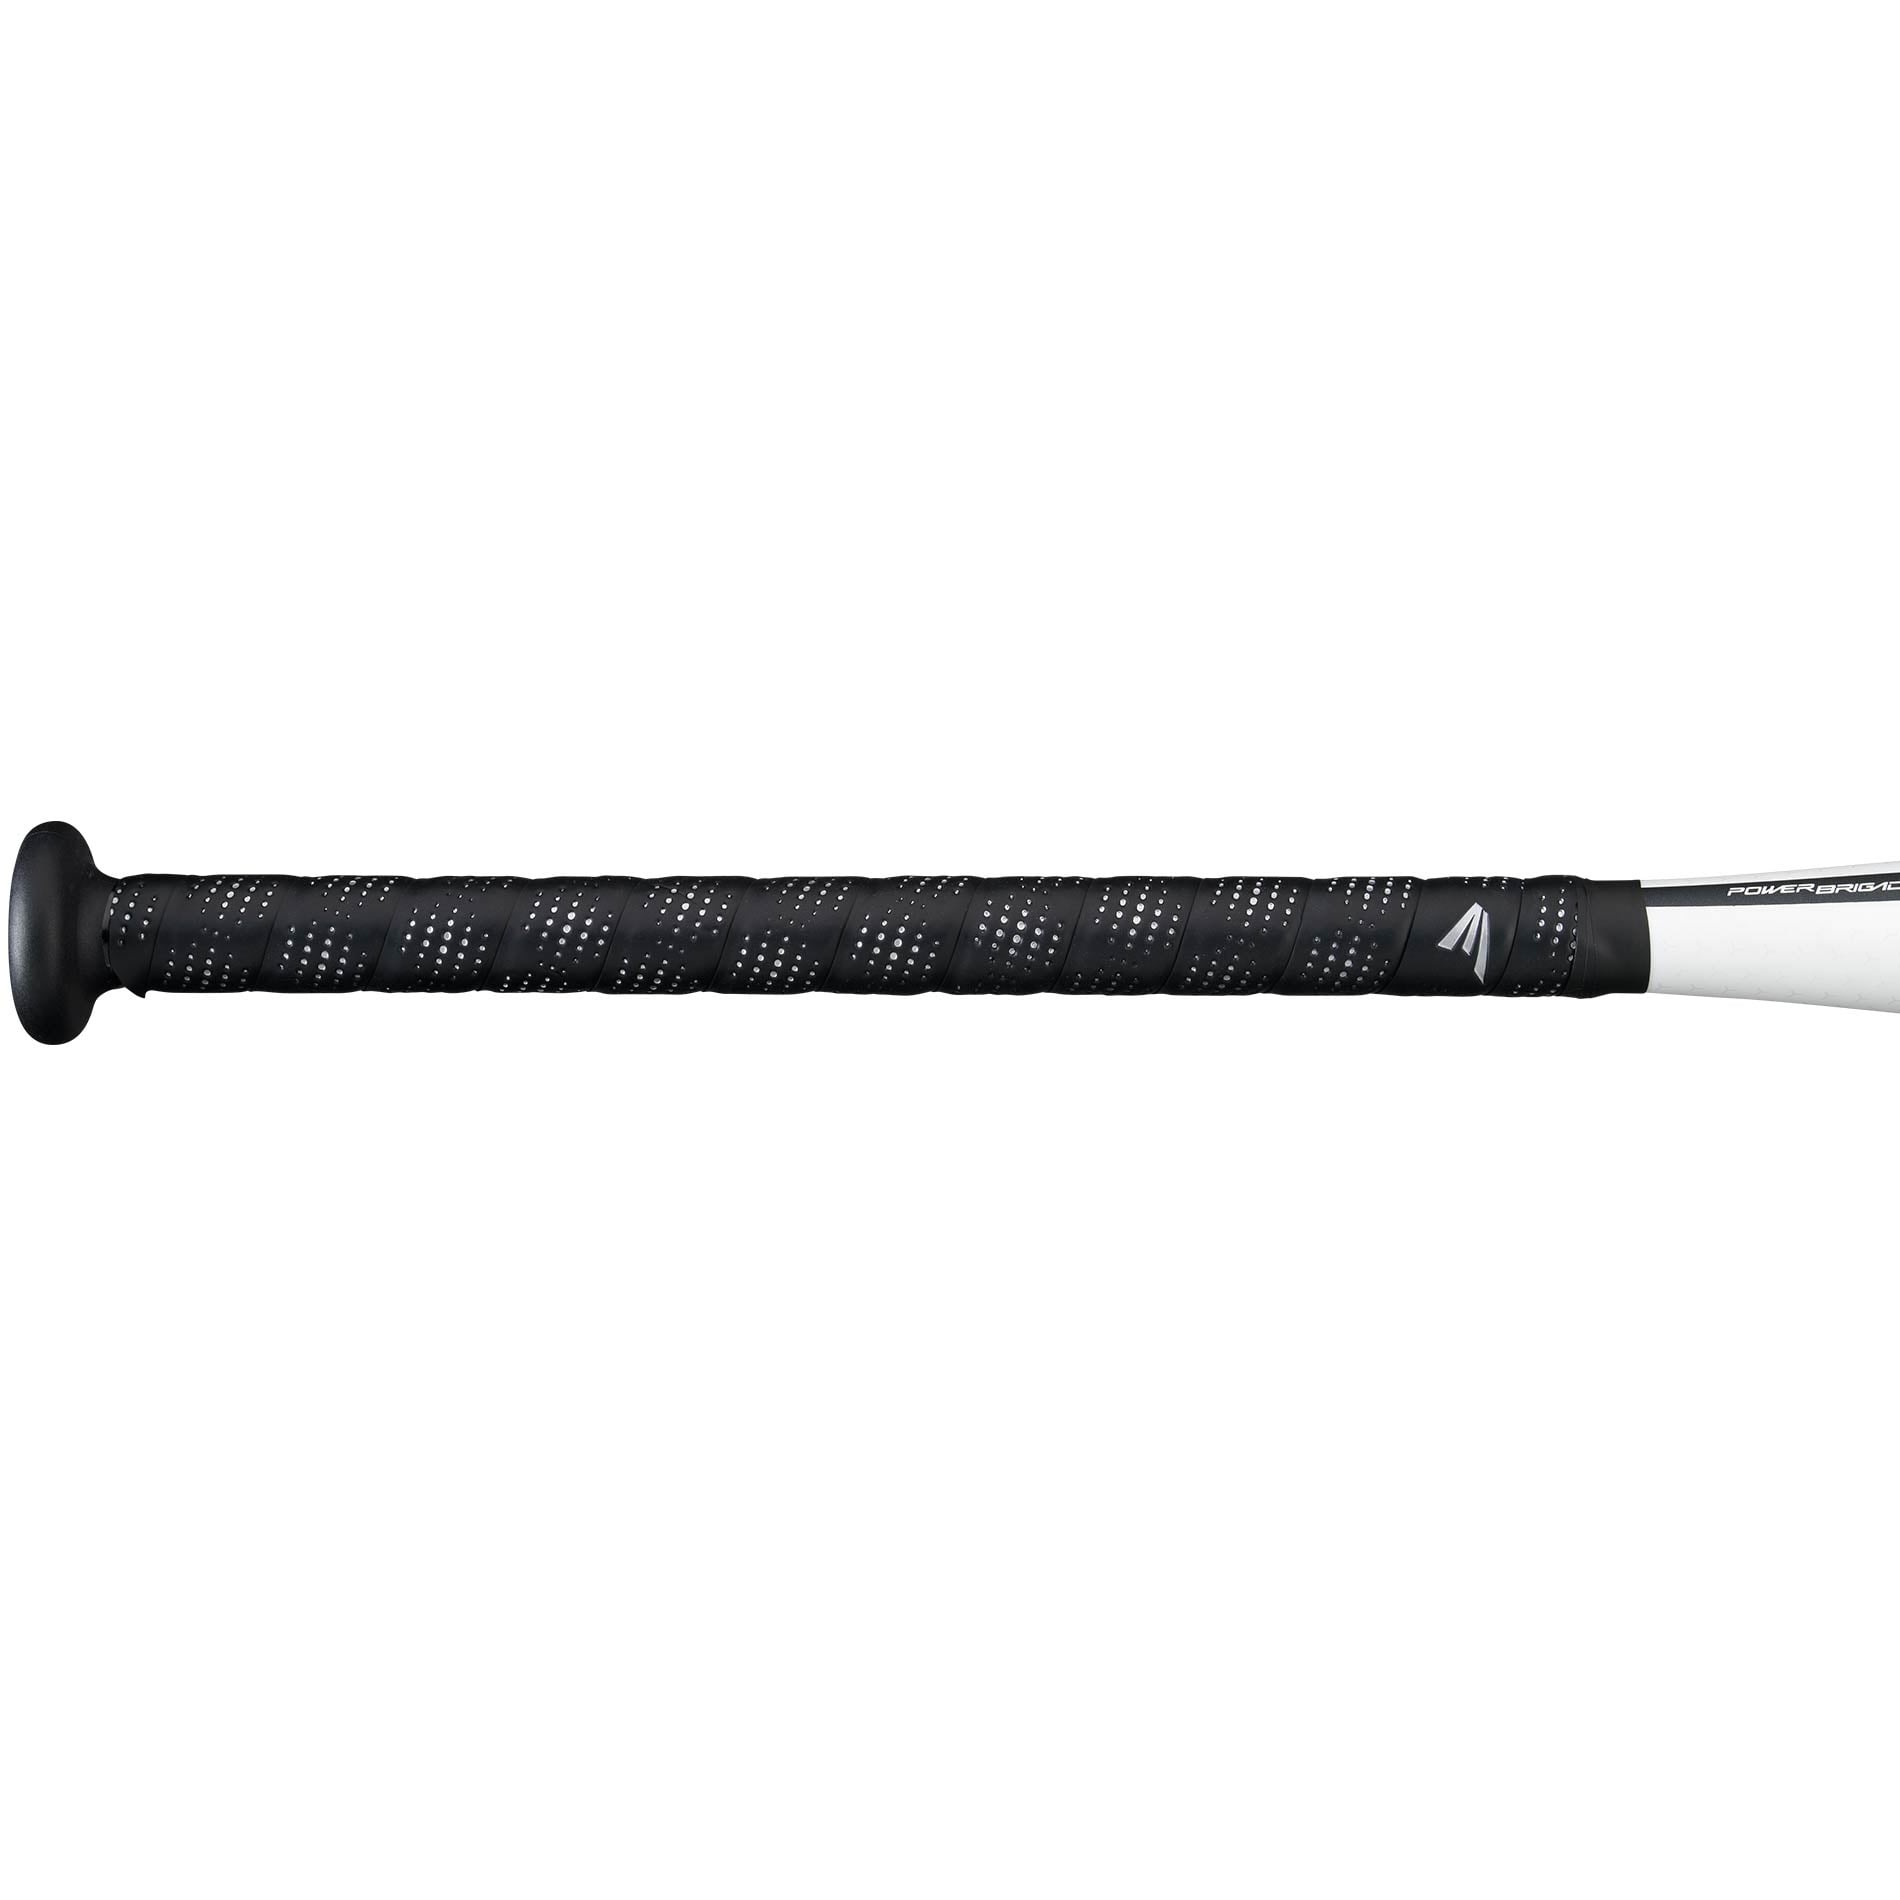 Reduce Vibration Ultra-Tacky Grip Easton 1.2mm Hyperskin™ BaseCamo Bat Grip 